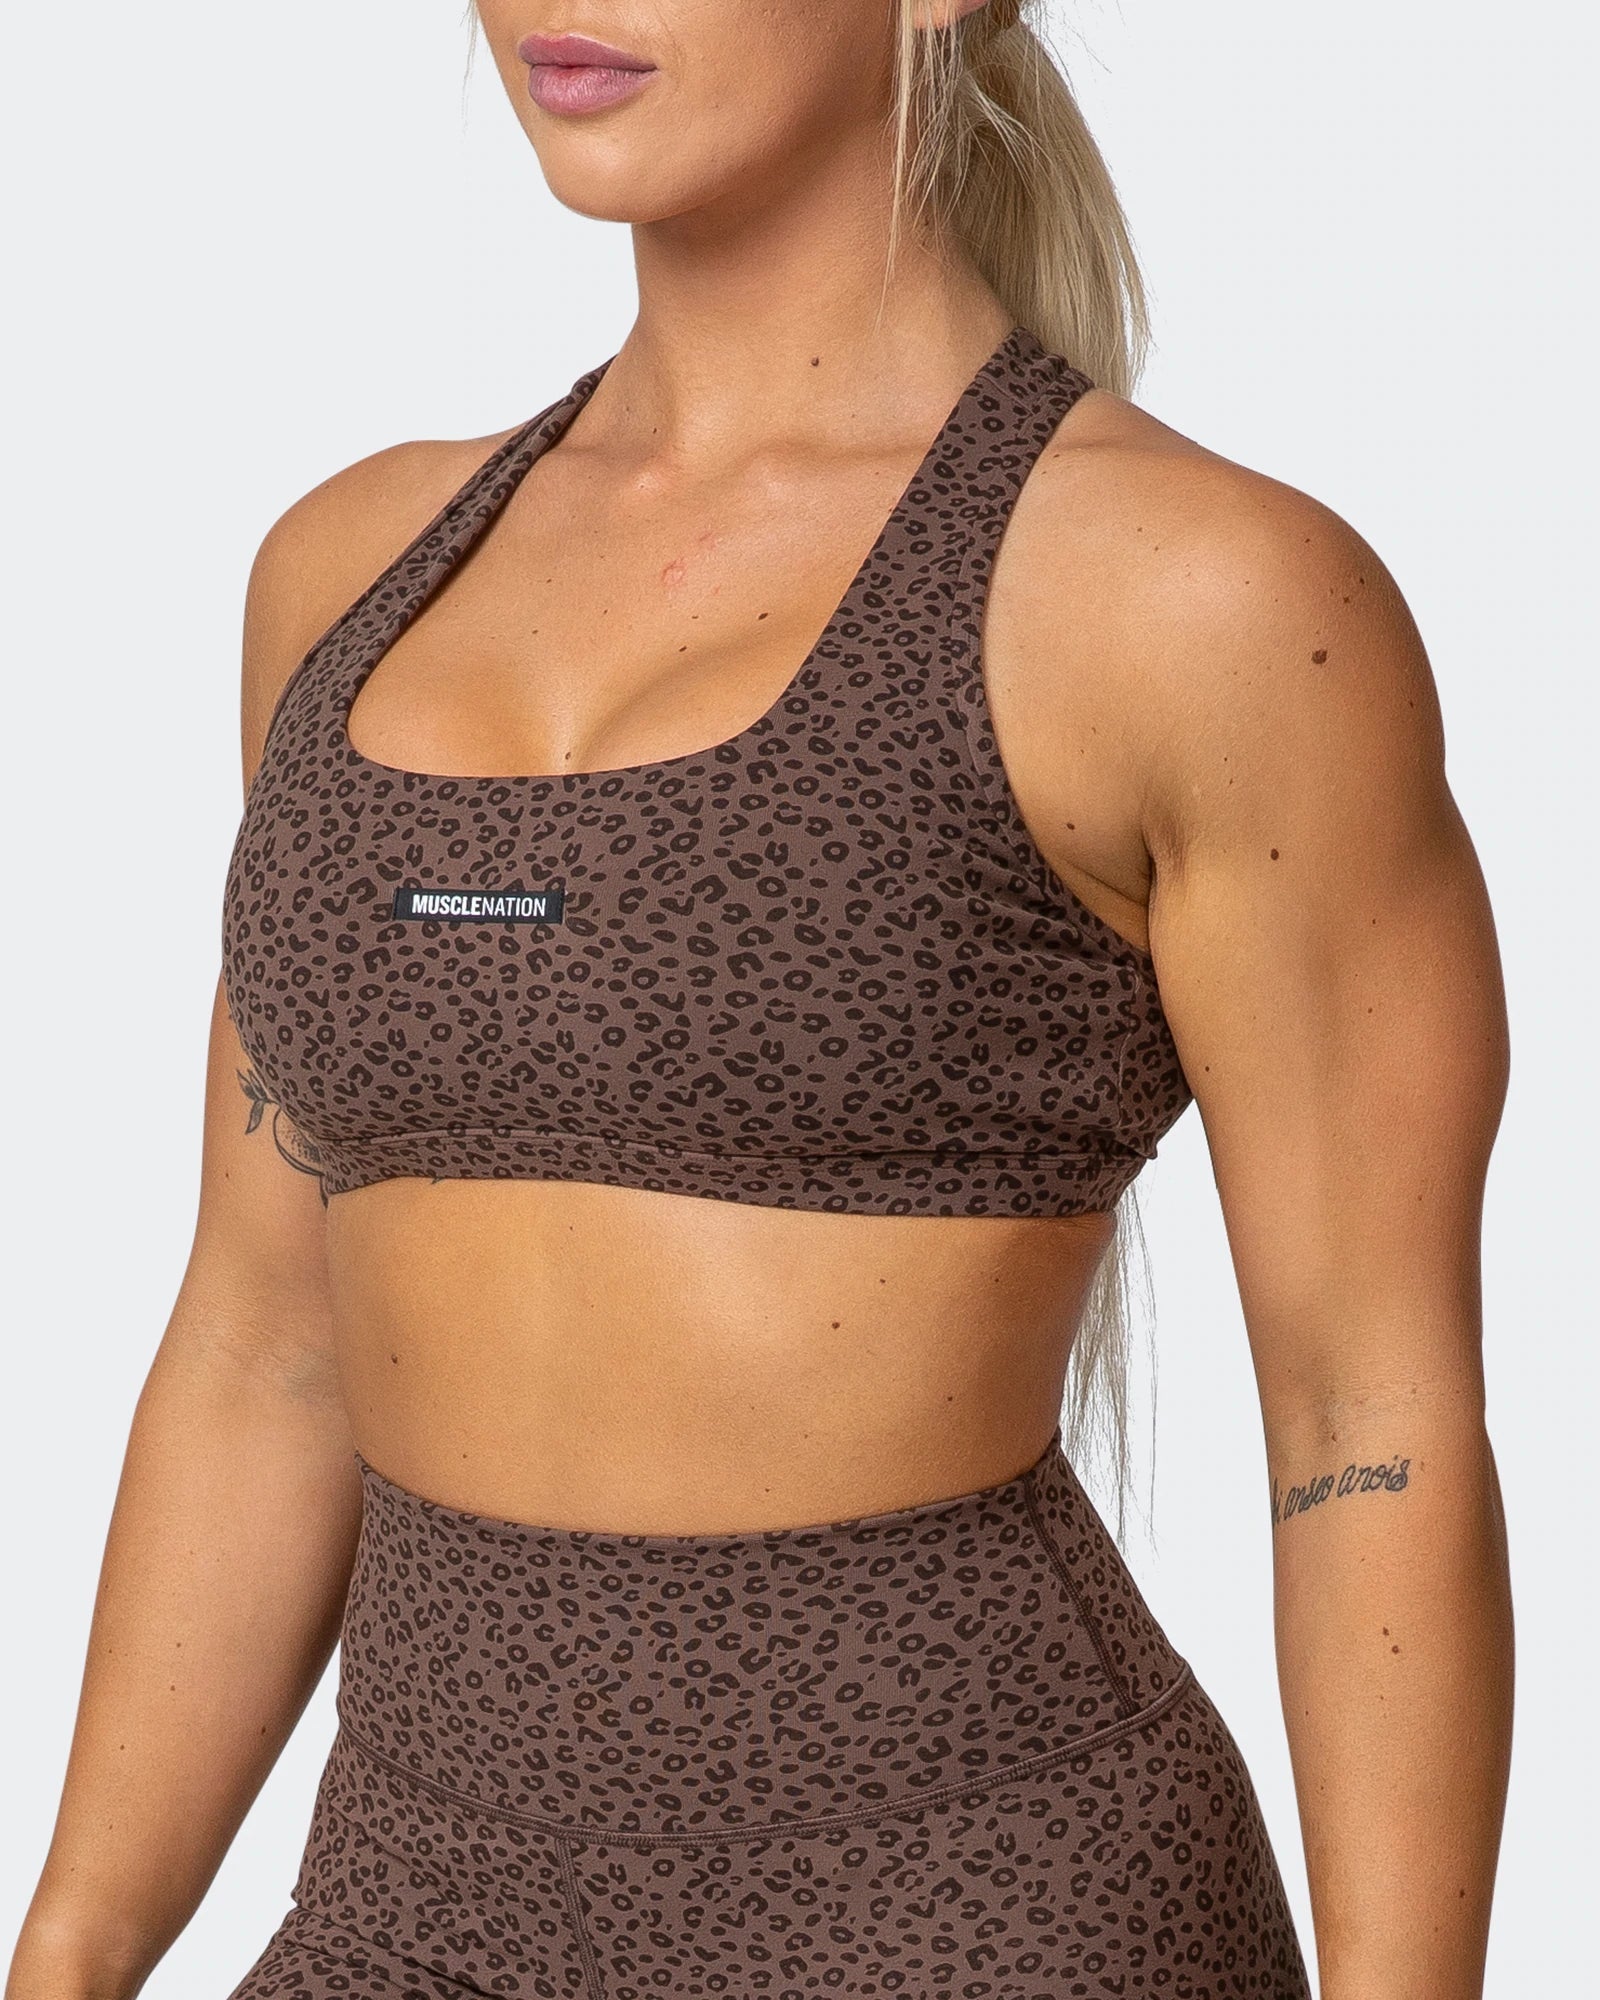 musclenation Sports Bra FLEX BRA Chocolate Mini Cheetah Print